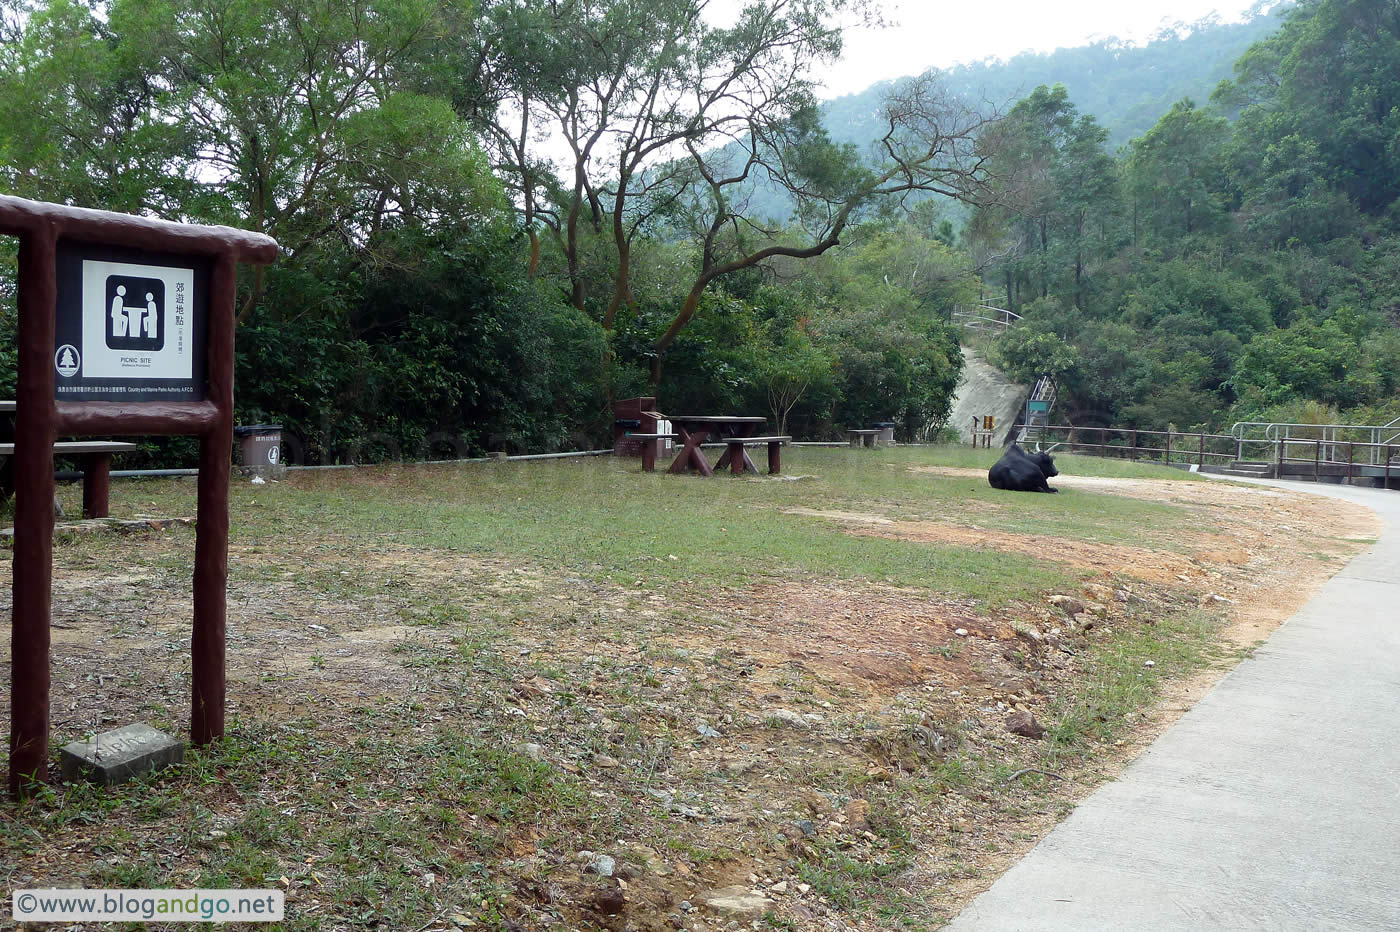 Lantau Trail 8 - End of section